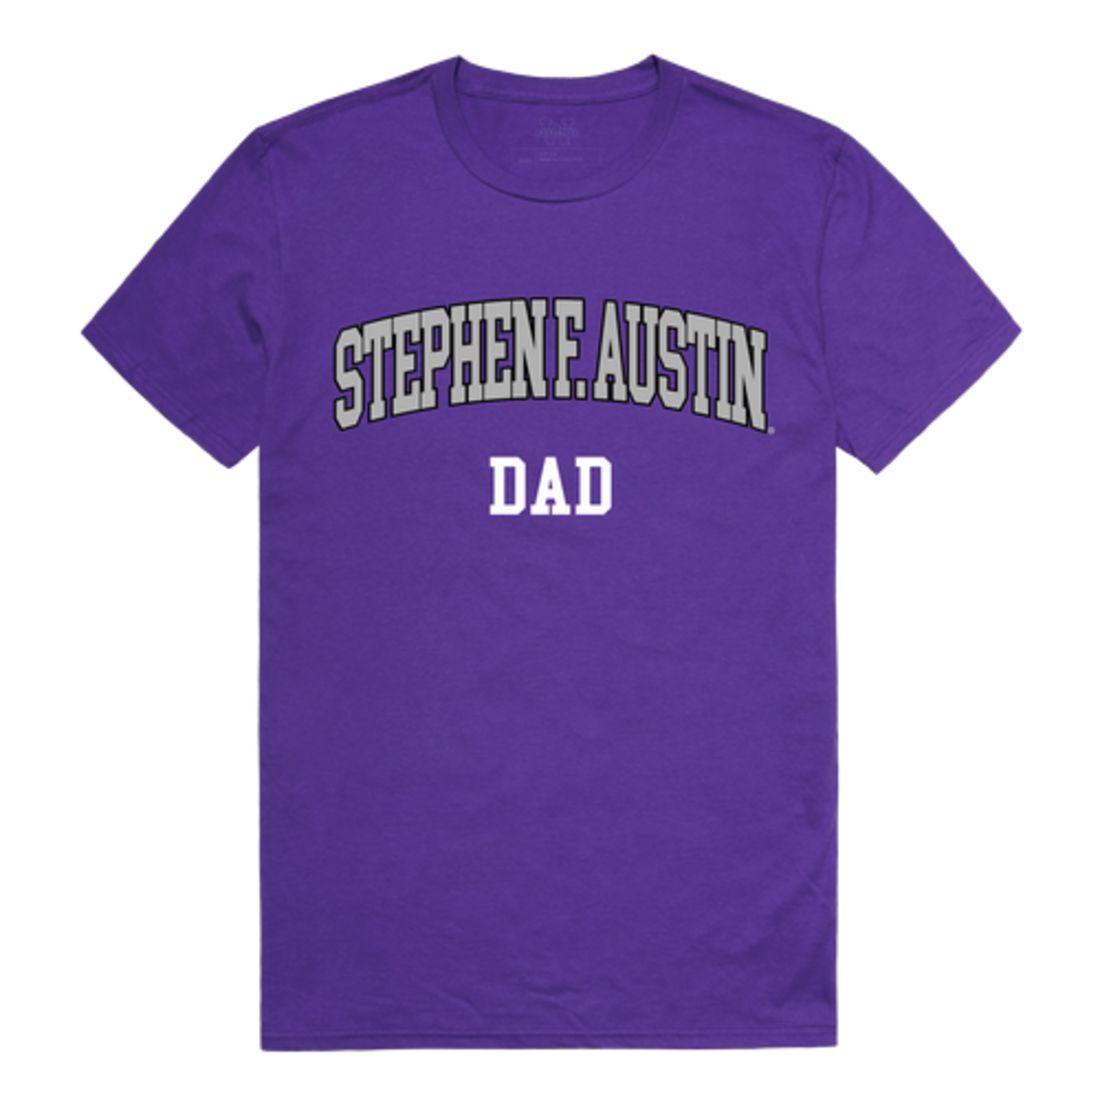 Stephen F. Austin State University Lumberjacks College Dad T-Shirt-Campus-Wardrobe